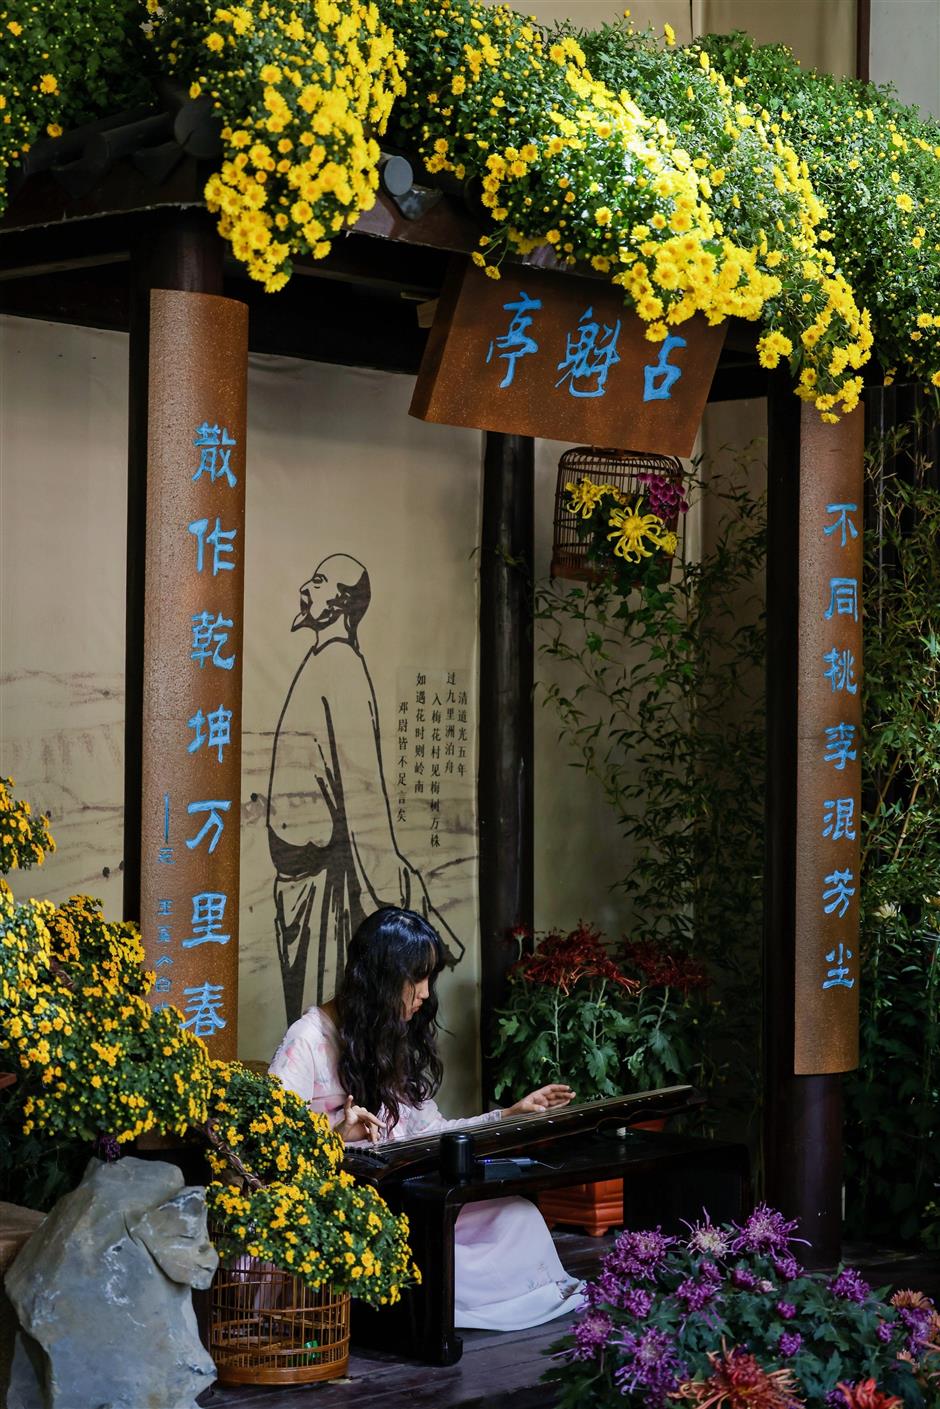 Mums the word at Hangzhou Botanic Garden